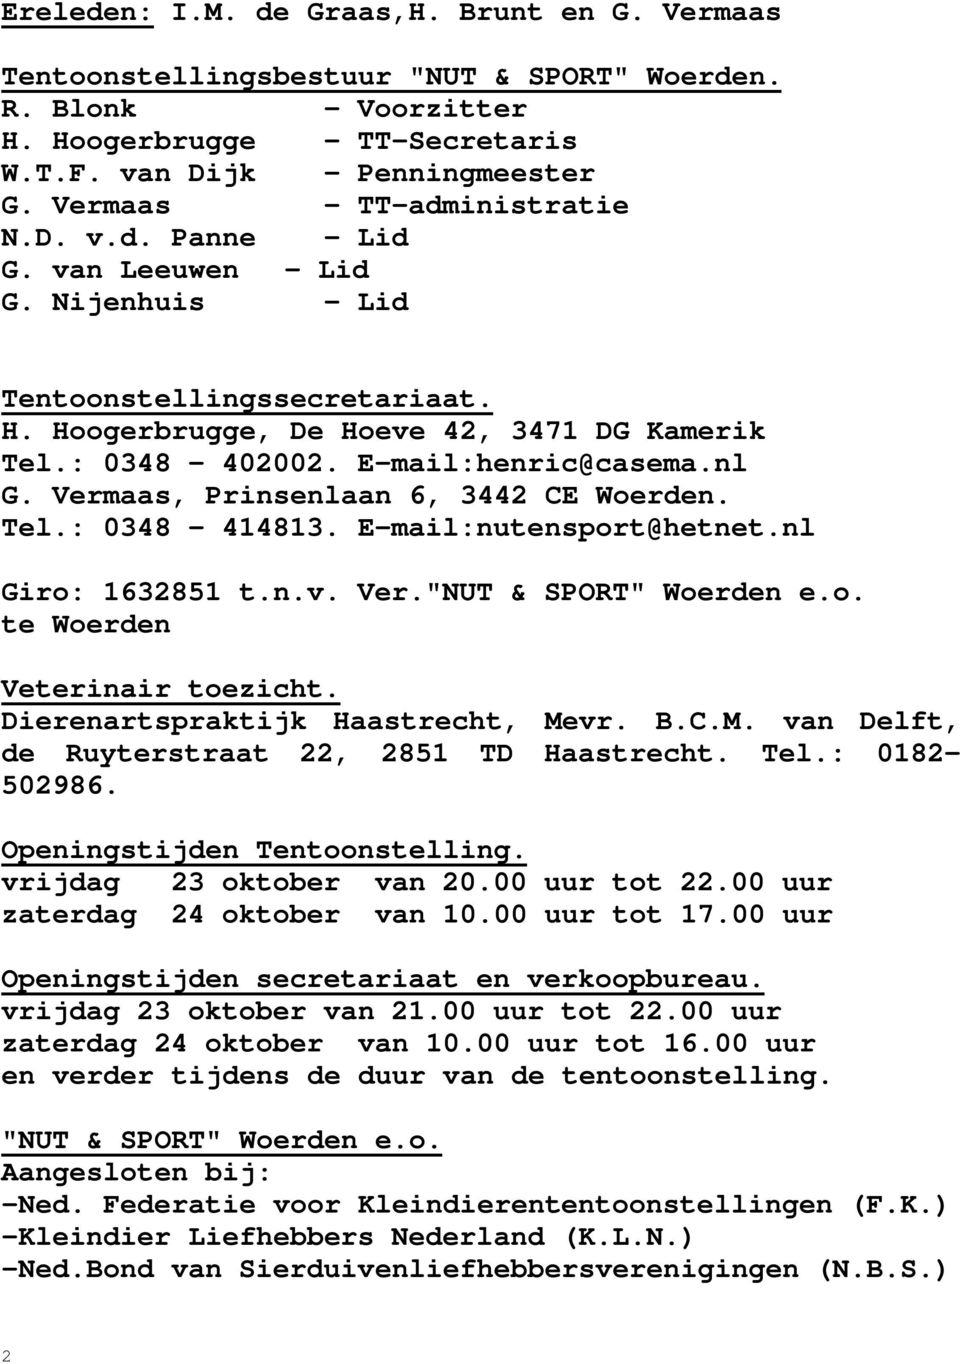 E-mail:henric@casema.nl G. Vermaas, Prinsenlaan 6, 3442 CE Woerden. Tel.: 0348-414813. E-mail:nutensport@hetnet.nl Giro: 1632851 t.n.v. Ver."NUT & SPORT" Woerden e.o. te Woerden Veterinair toezicht.